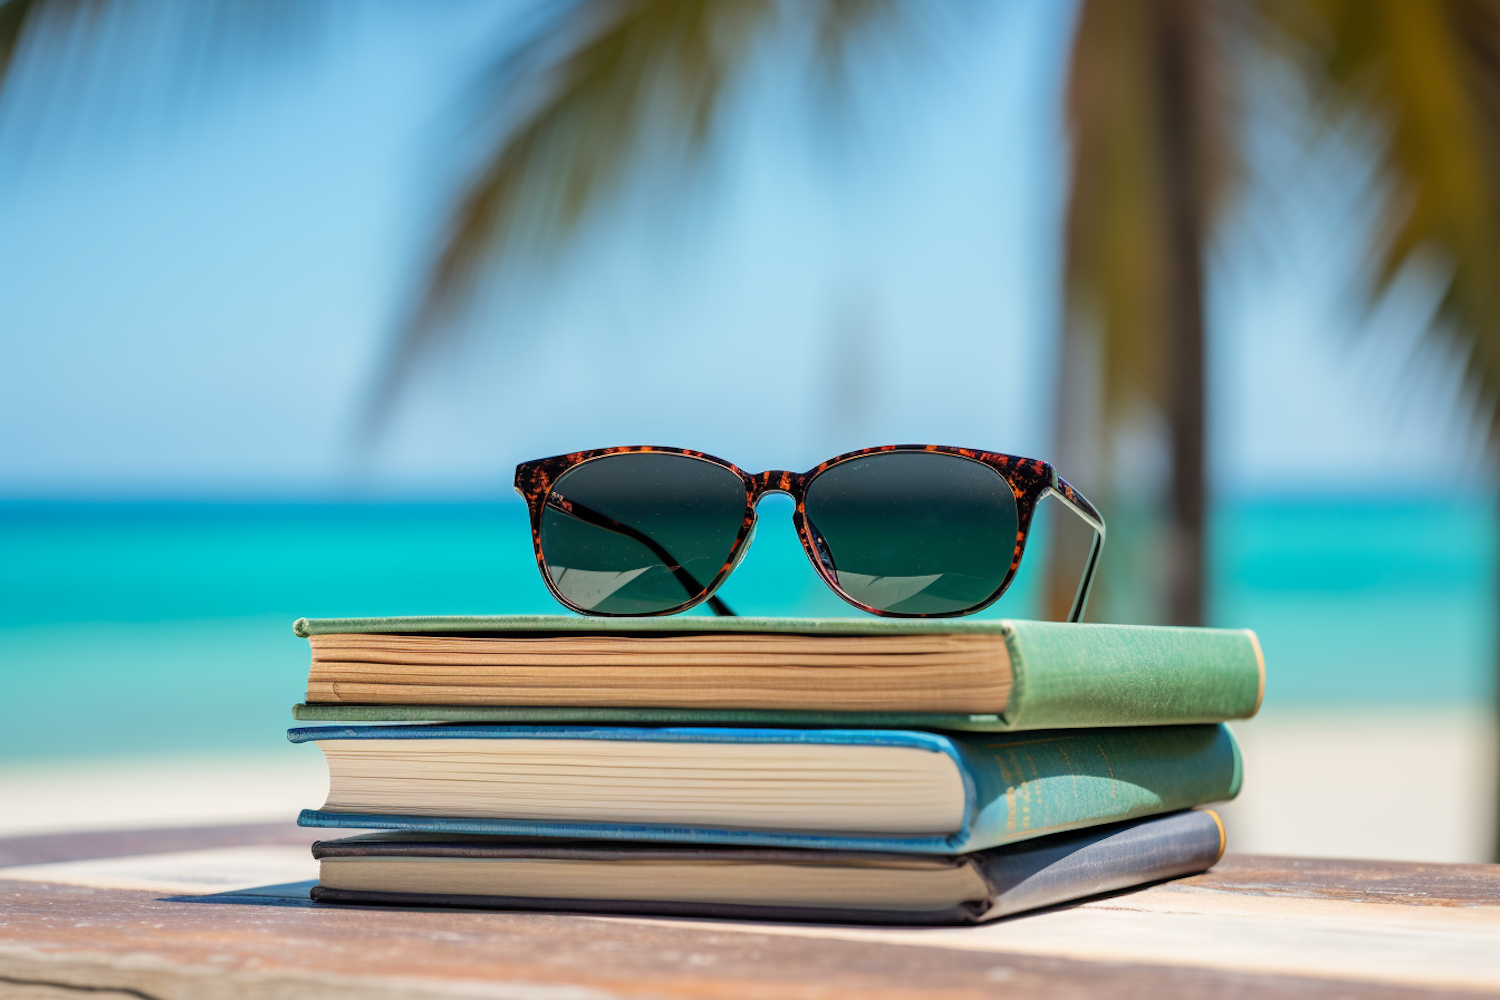 Literary Escape: Books and Sunglasses on a Tropical Beach